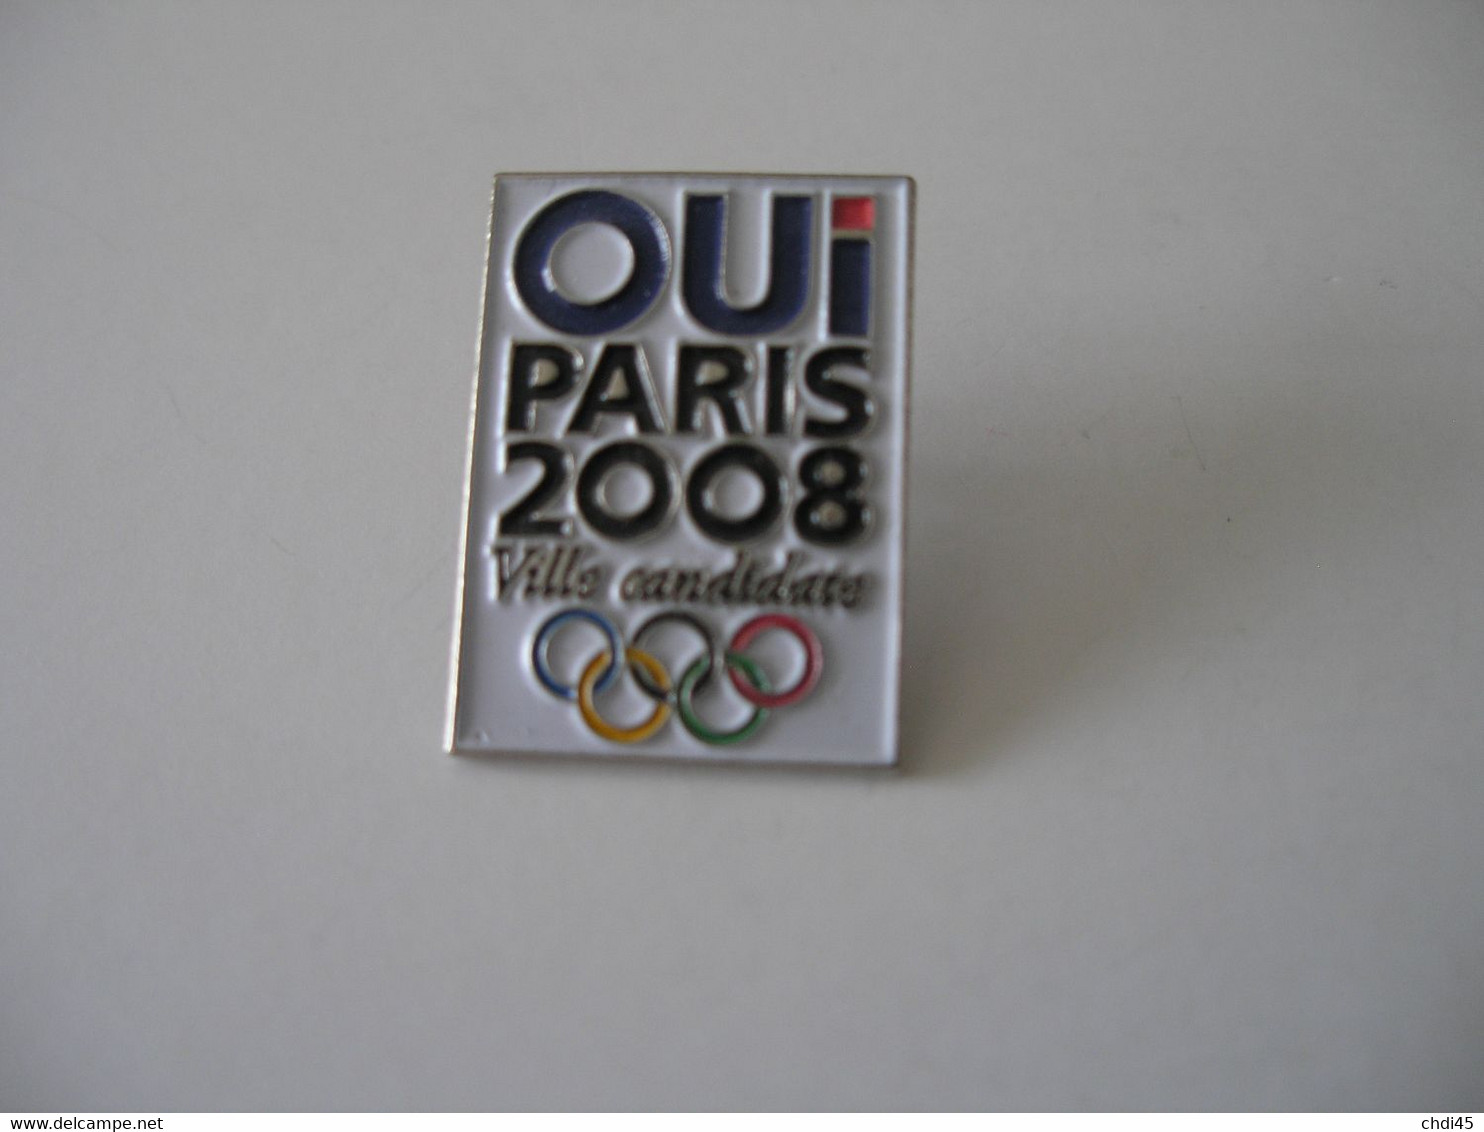 * OUI PARIS 2008 Ville Candidate Anneaux Olympiques - Olympische Spiele